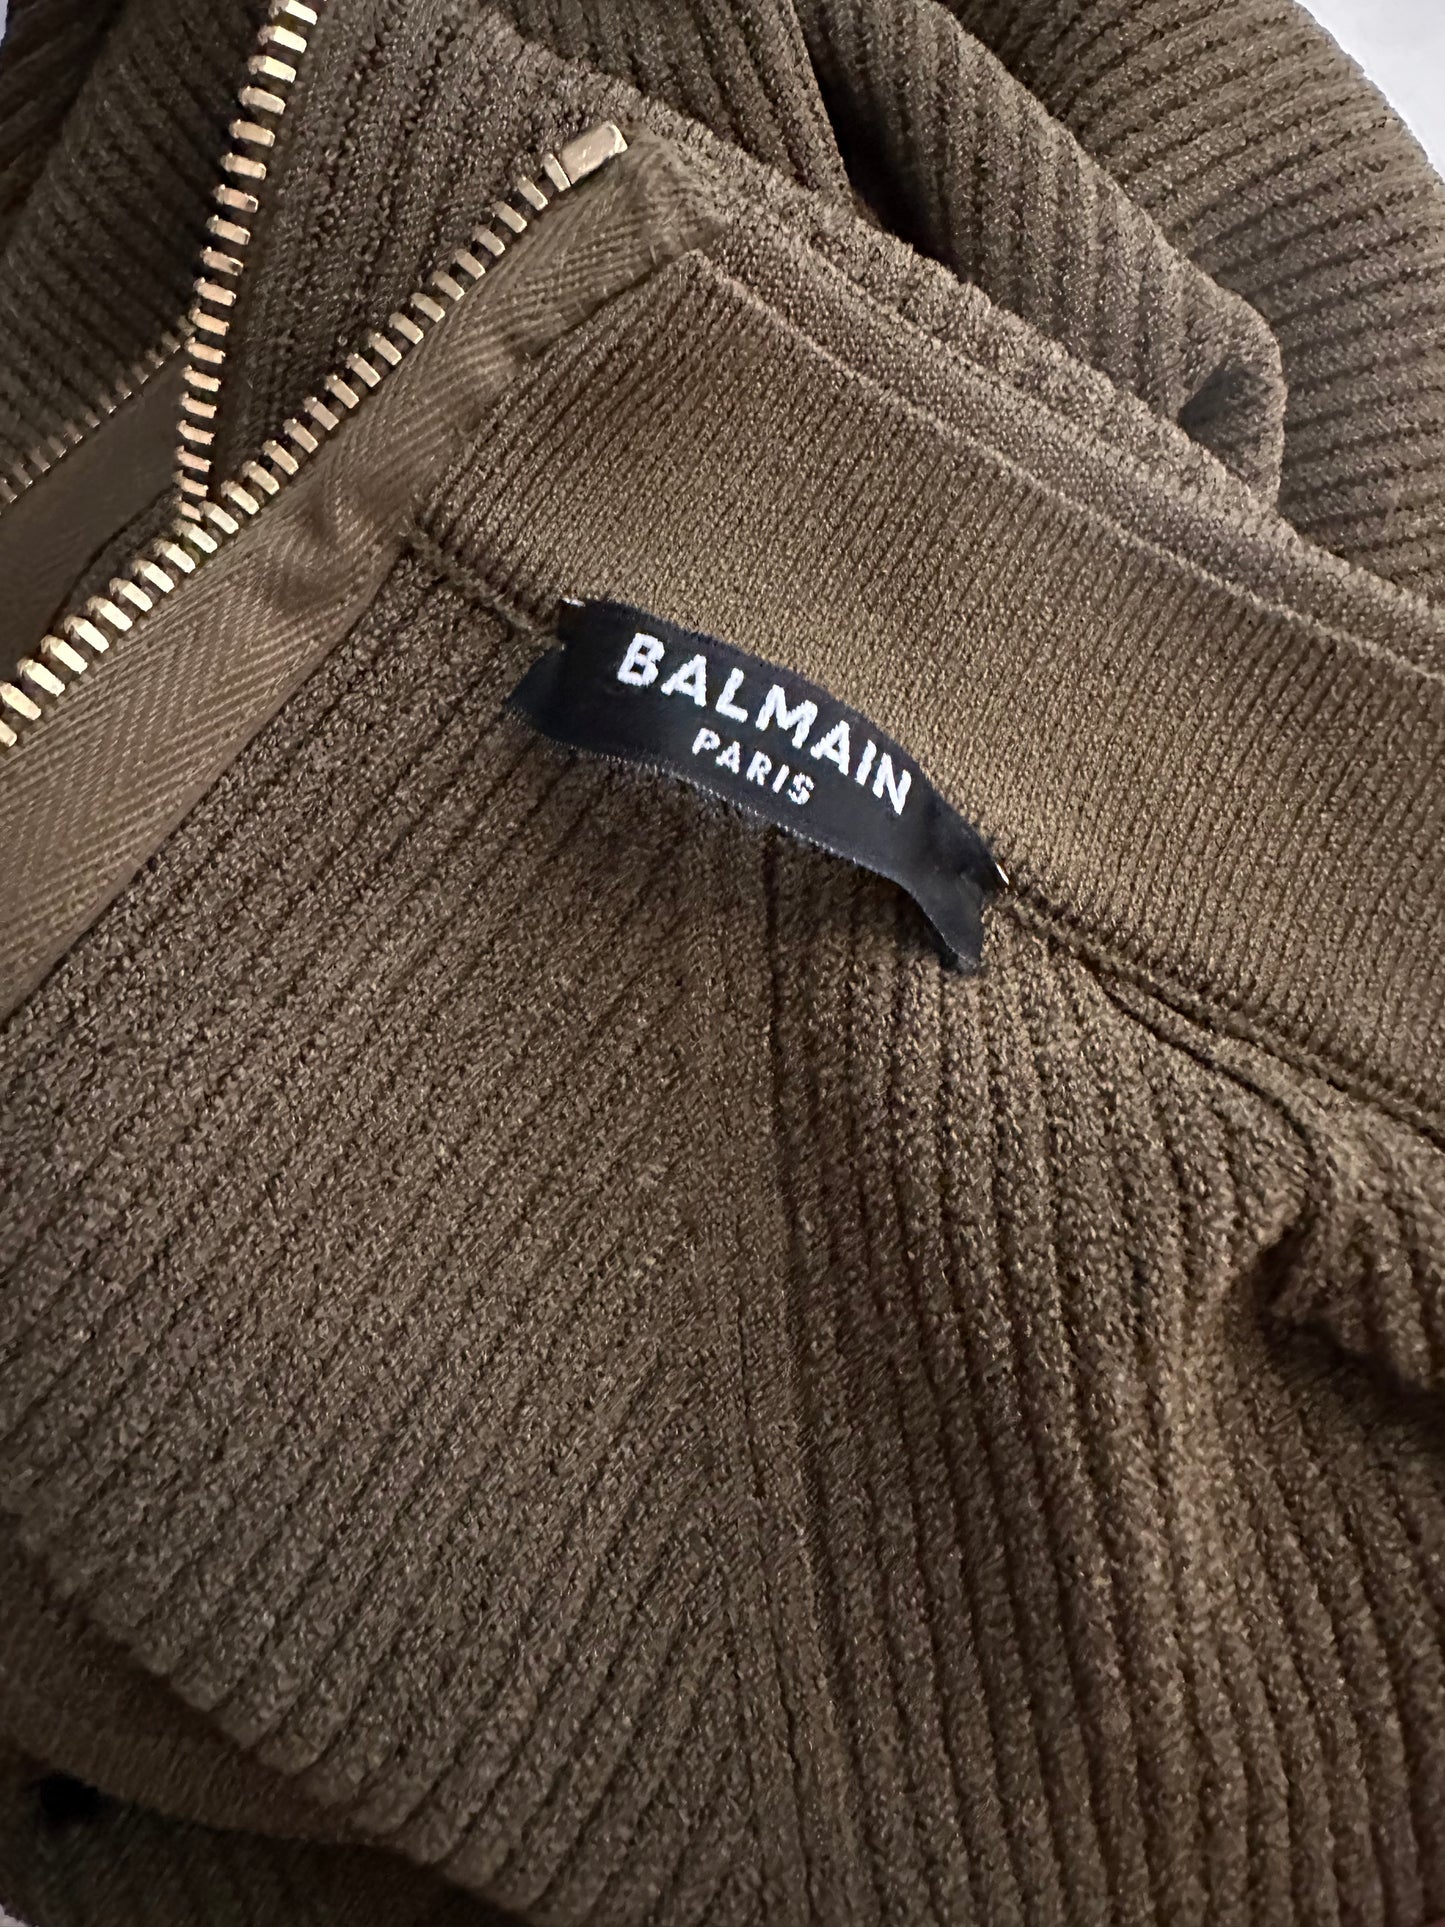 BALMAIN - Dress khaki size s